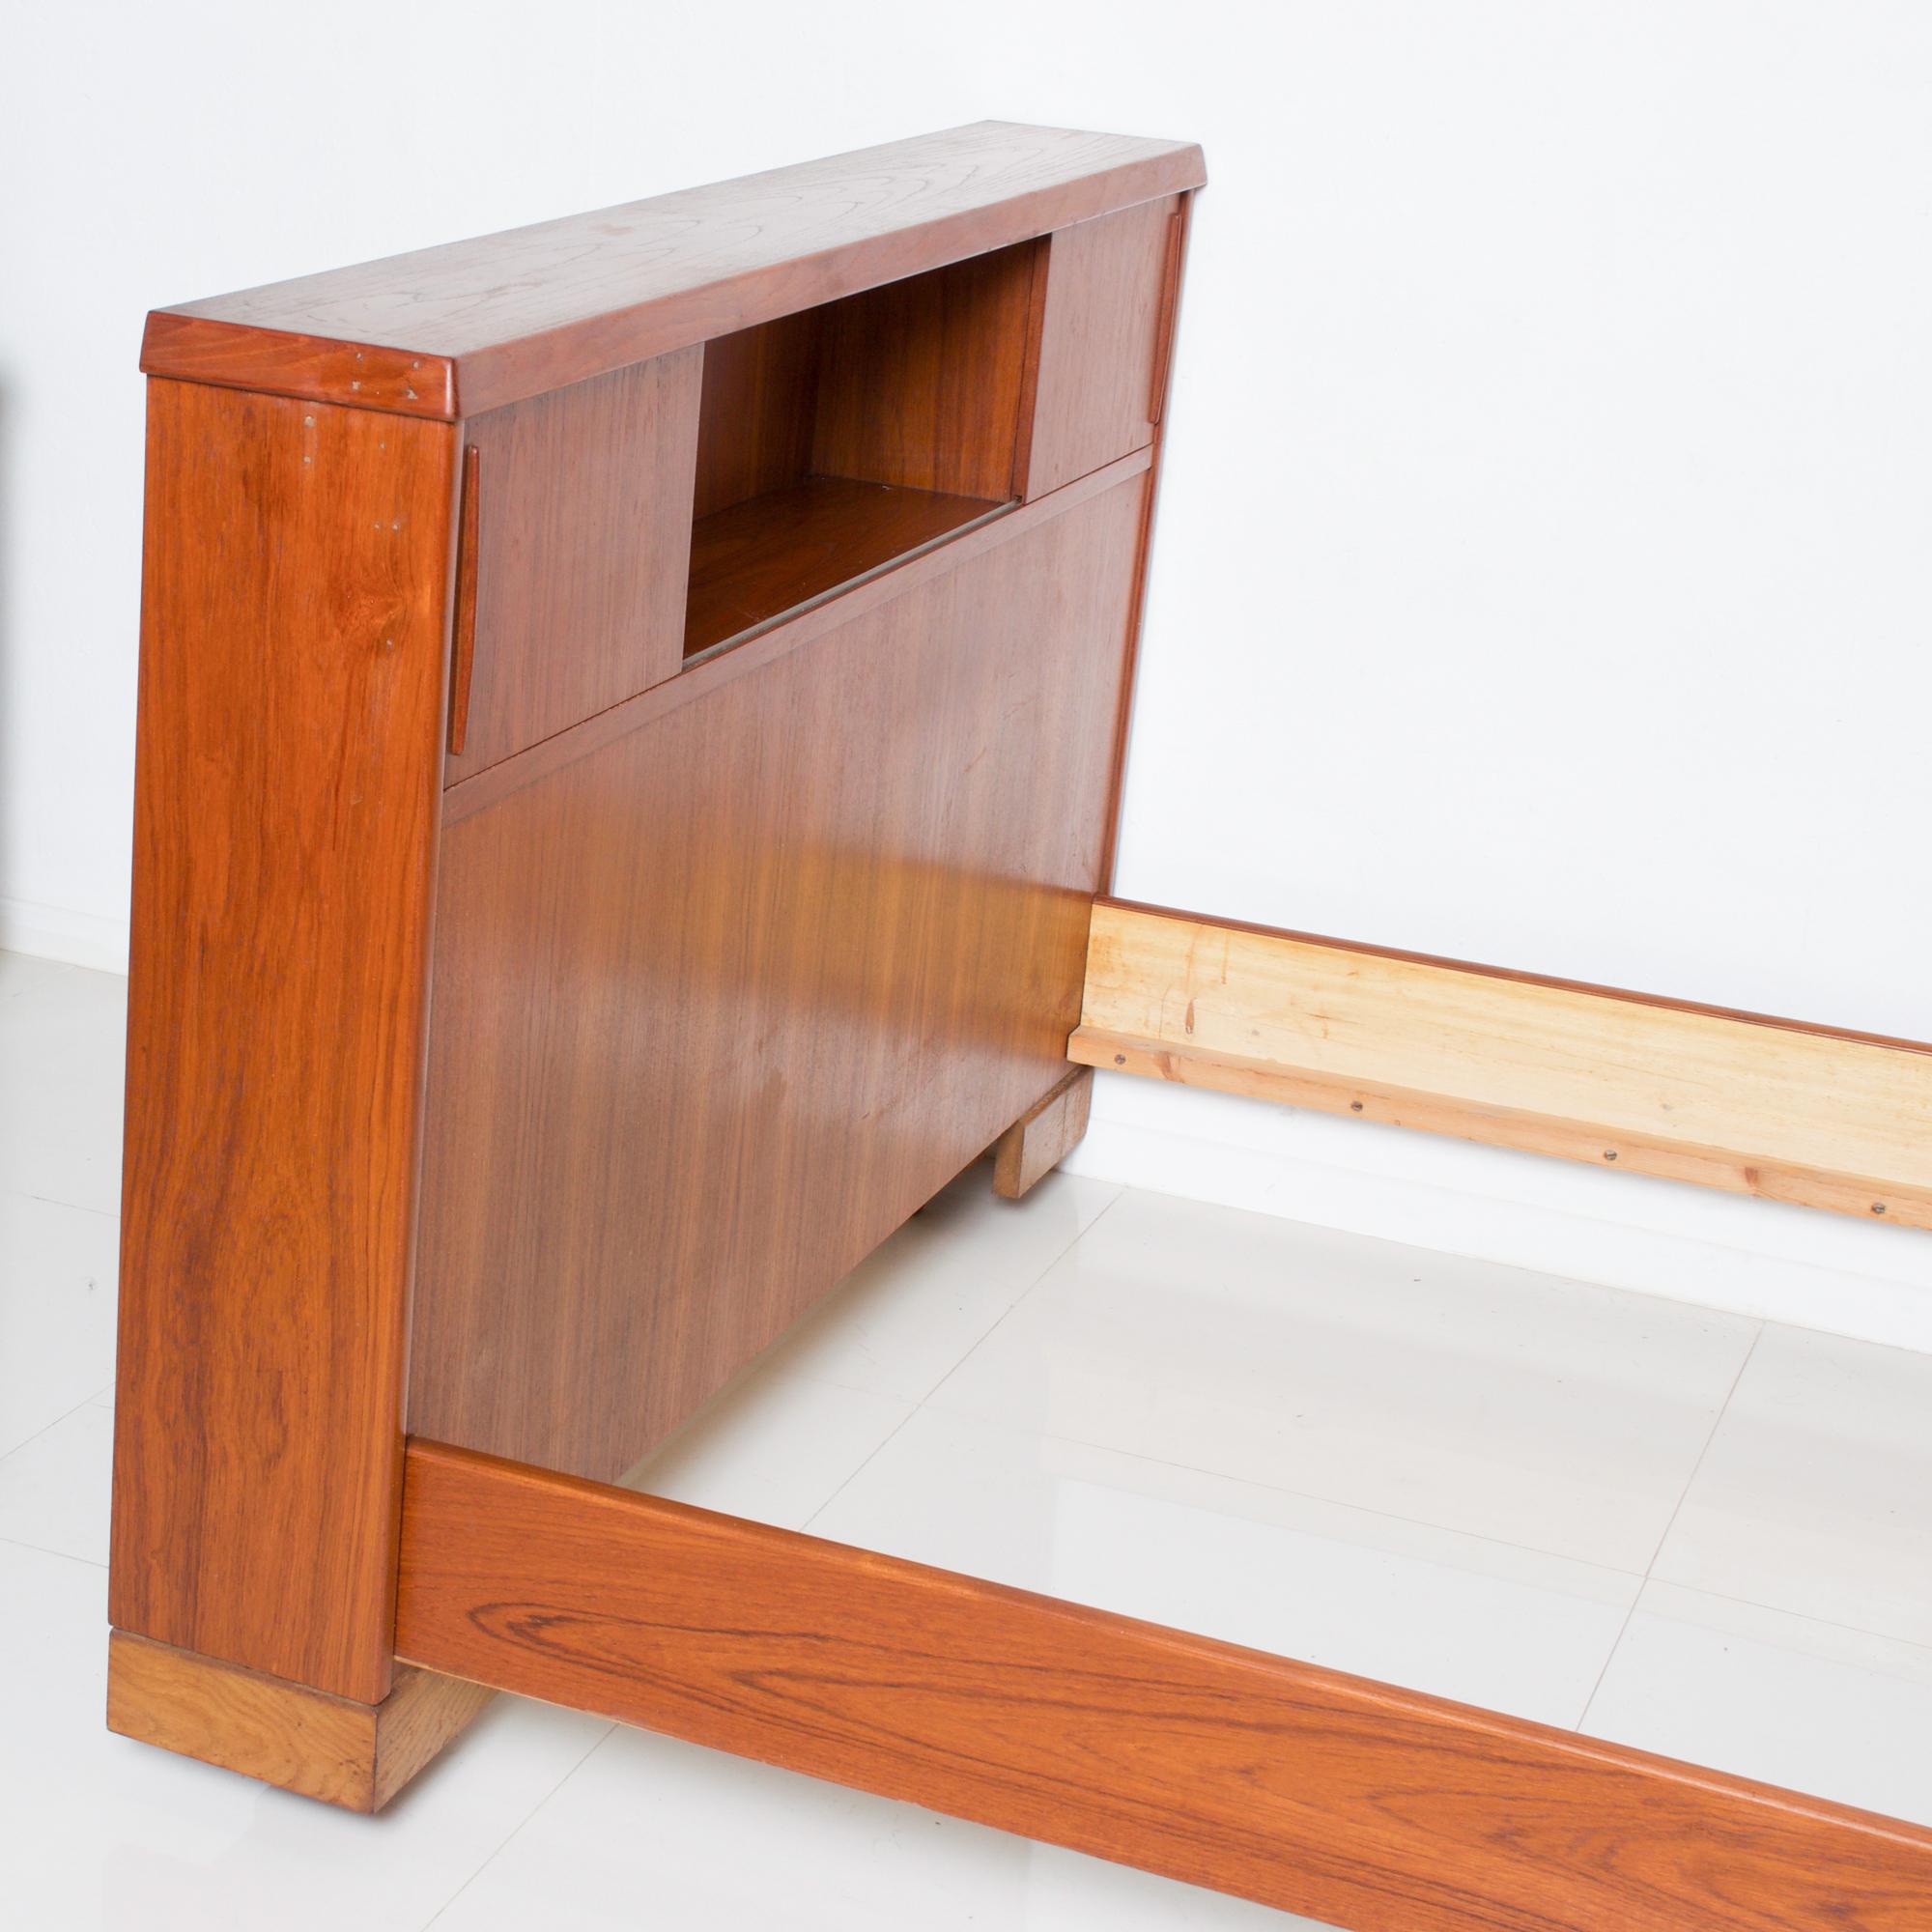 Mid-20th Century Scandinavian Modern Teak Wood Bed Thick Tall Headboard Design in Full 1960s